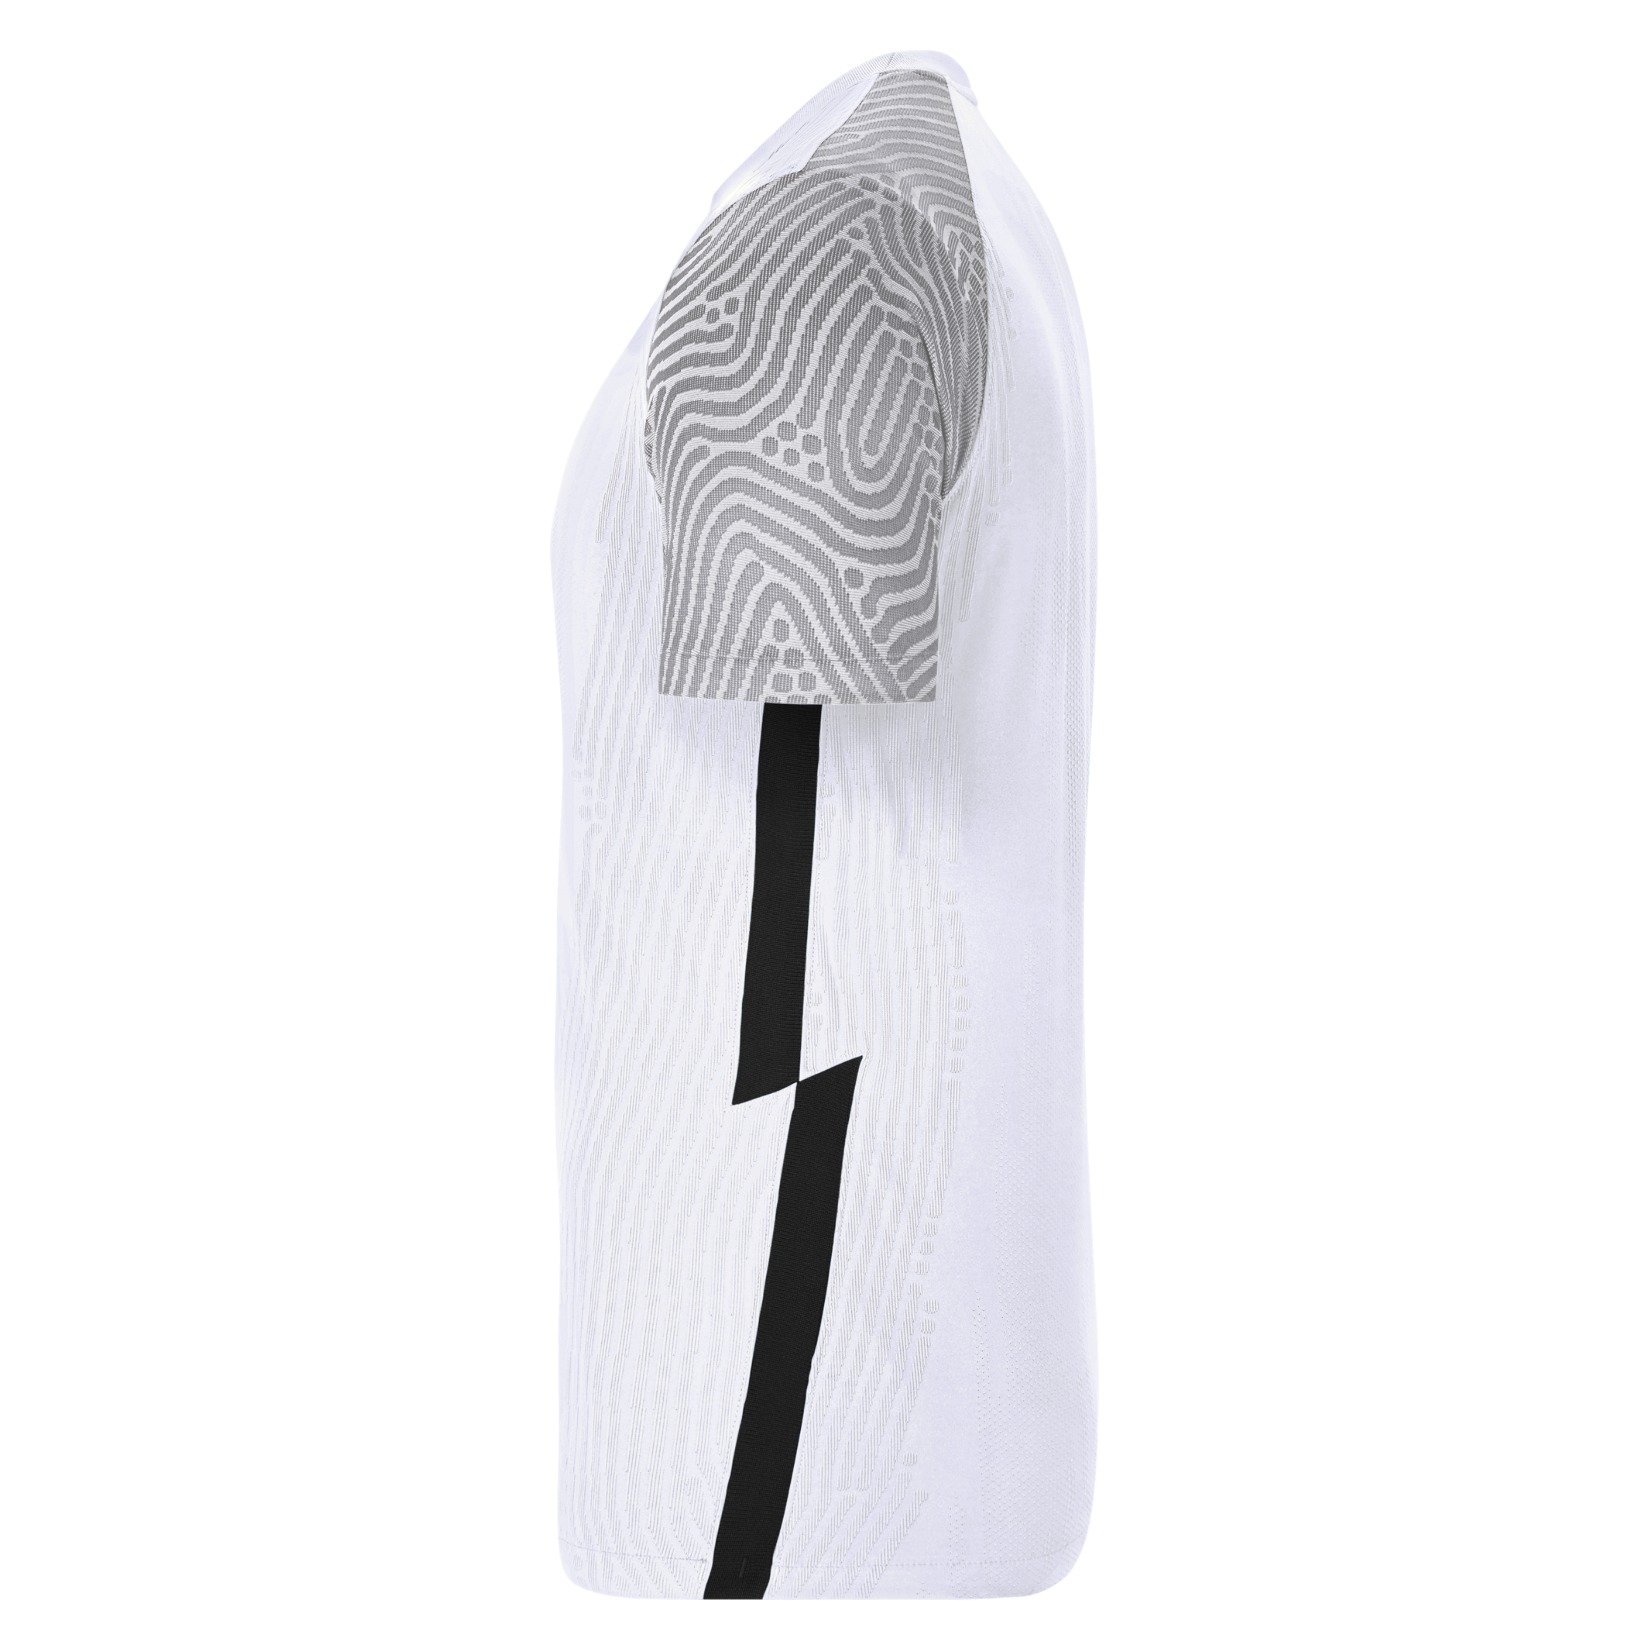 Nike Vapor Knit III Jersey - Kitlocker.com